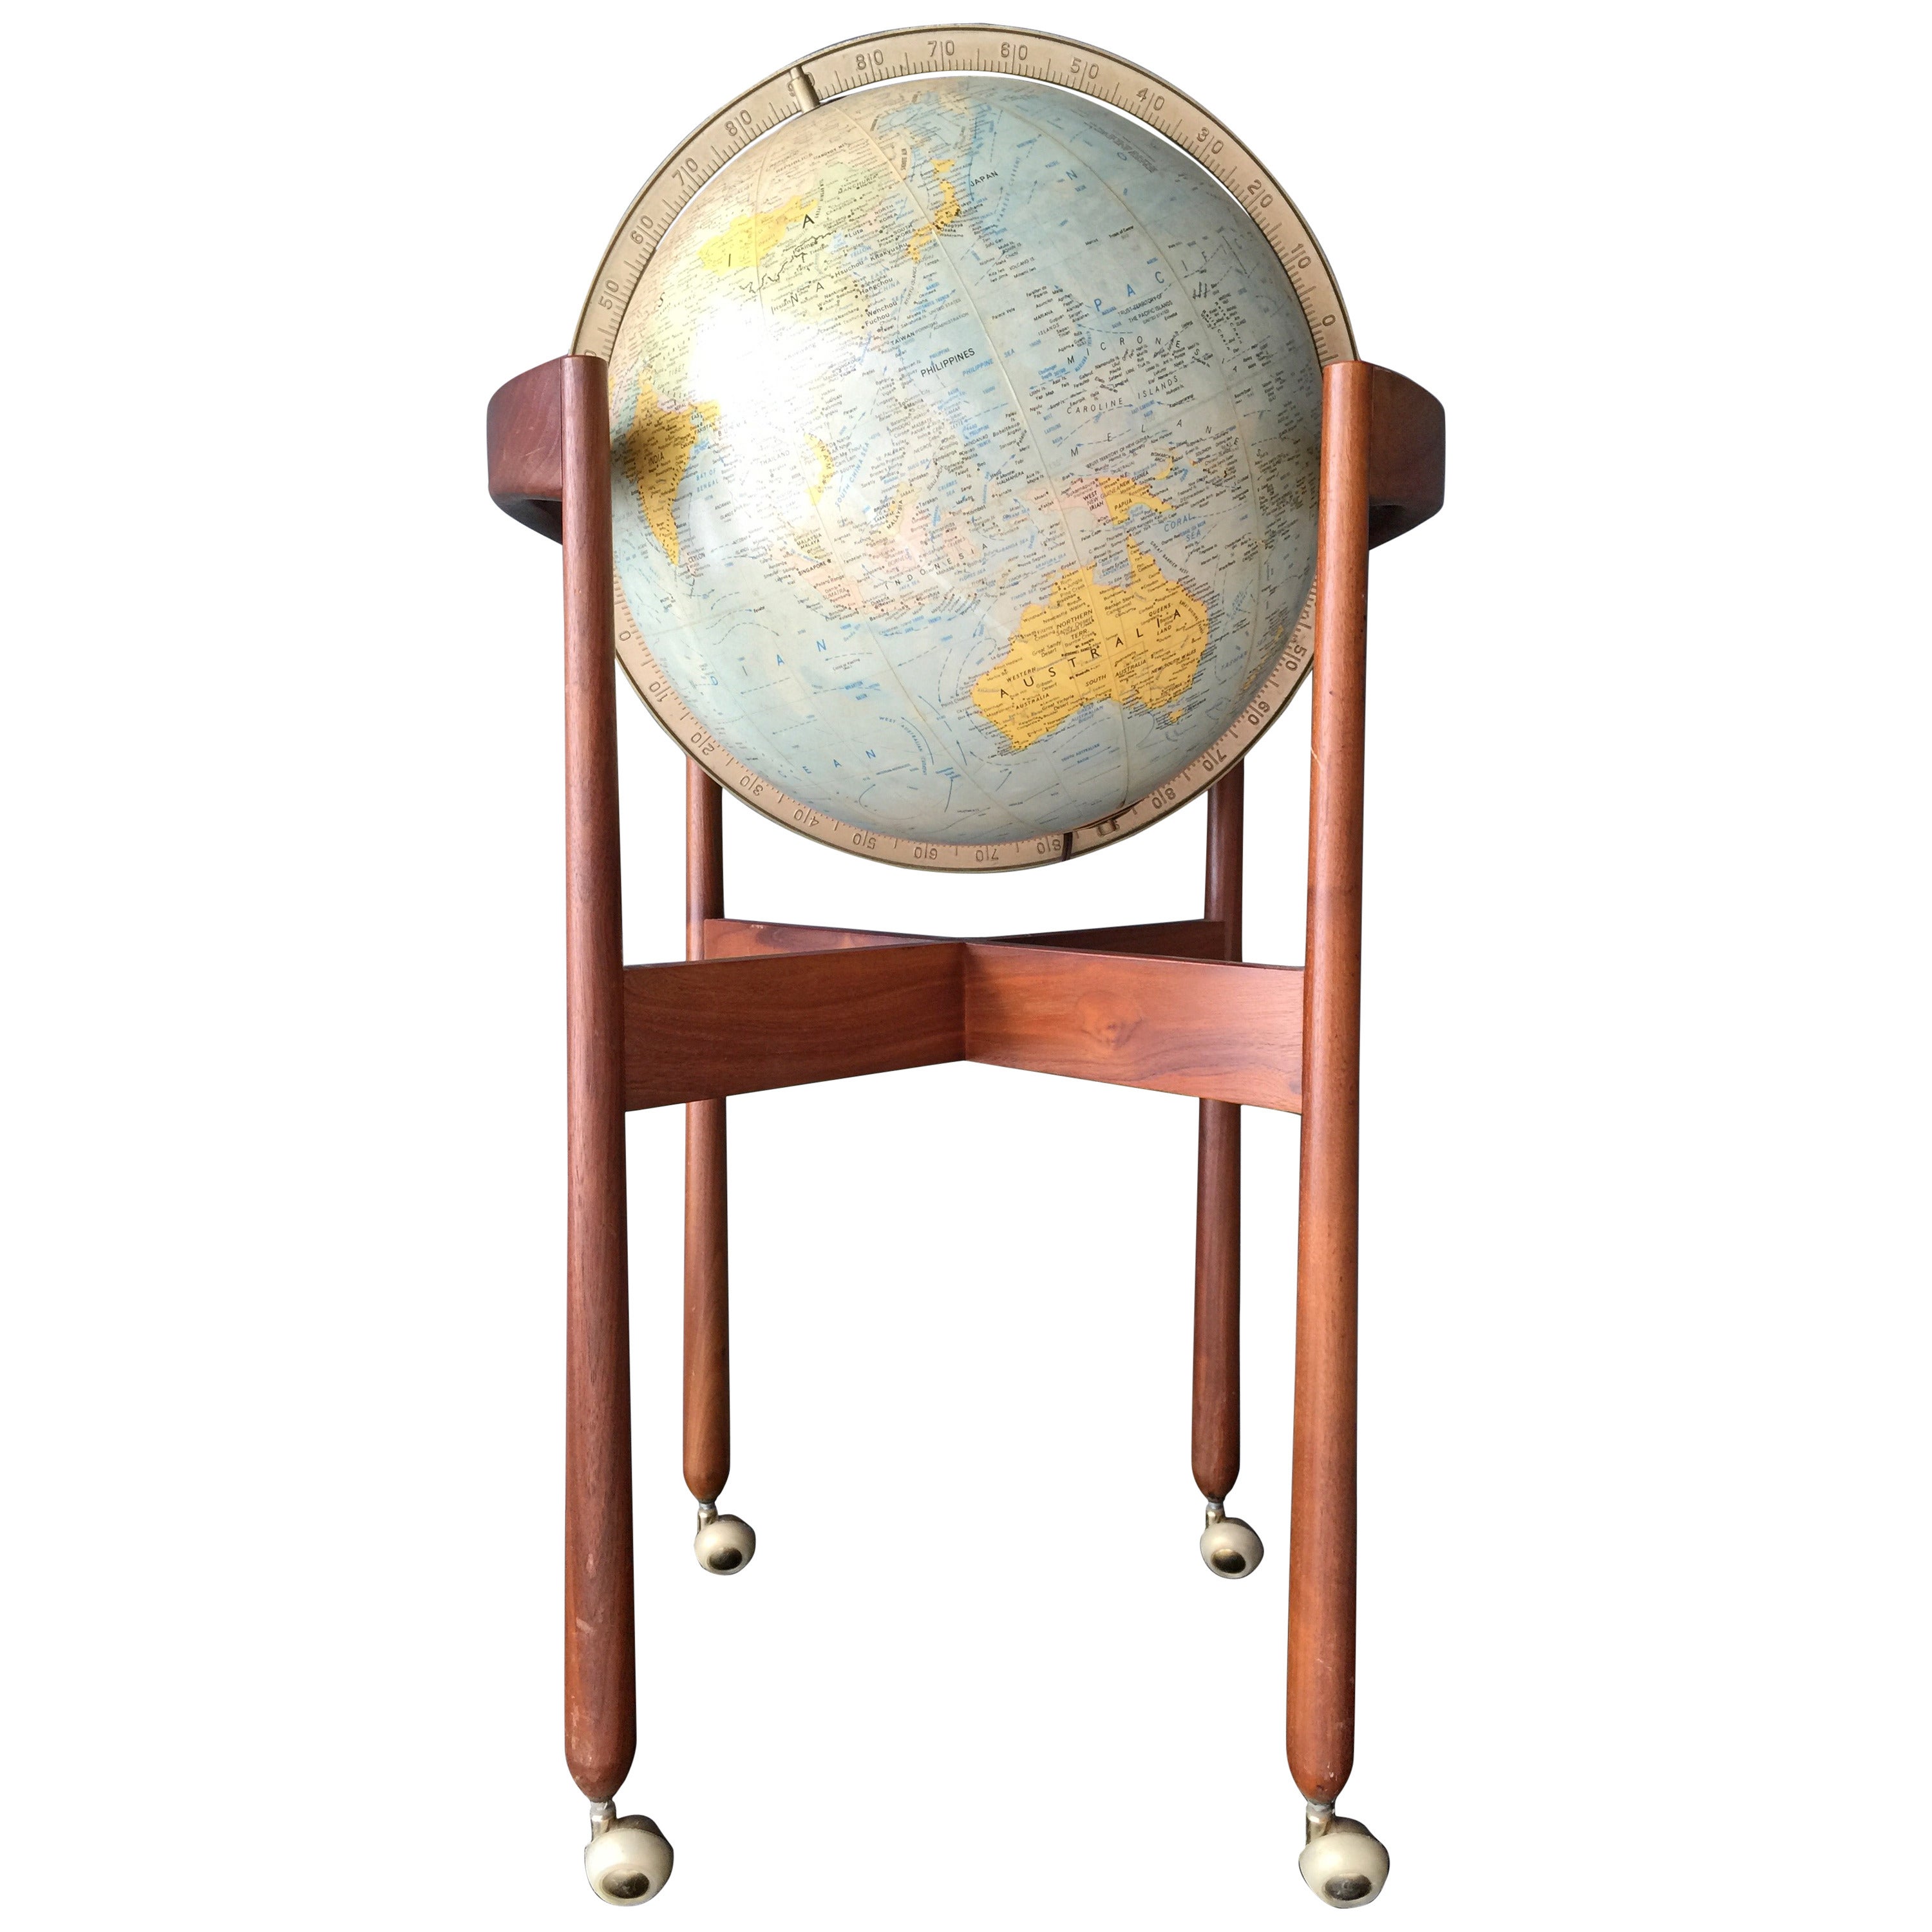 Jens Risom Vintage Illuminated World Globe on Stand